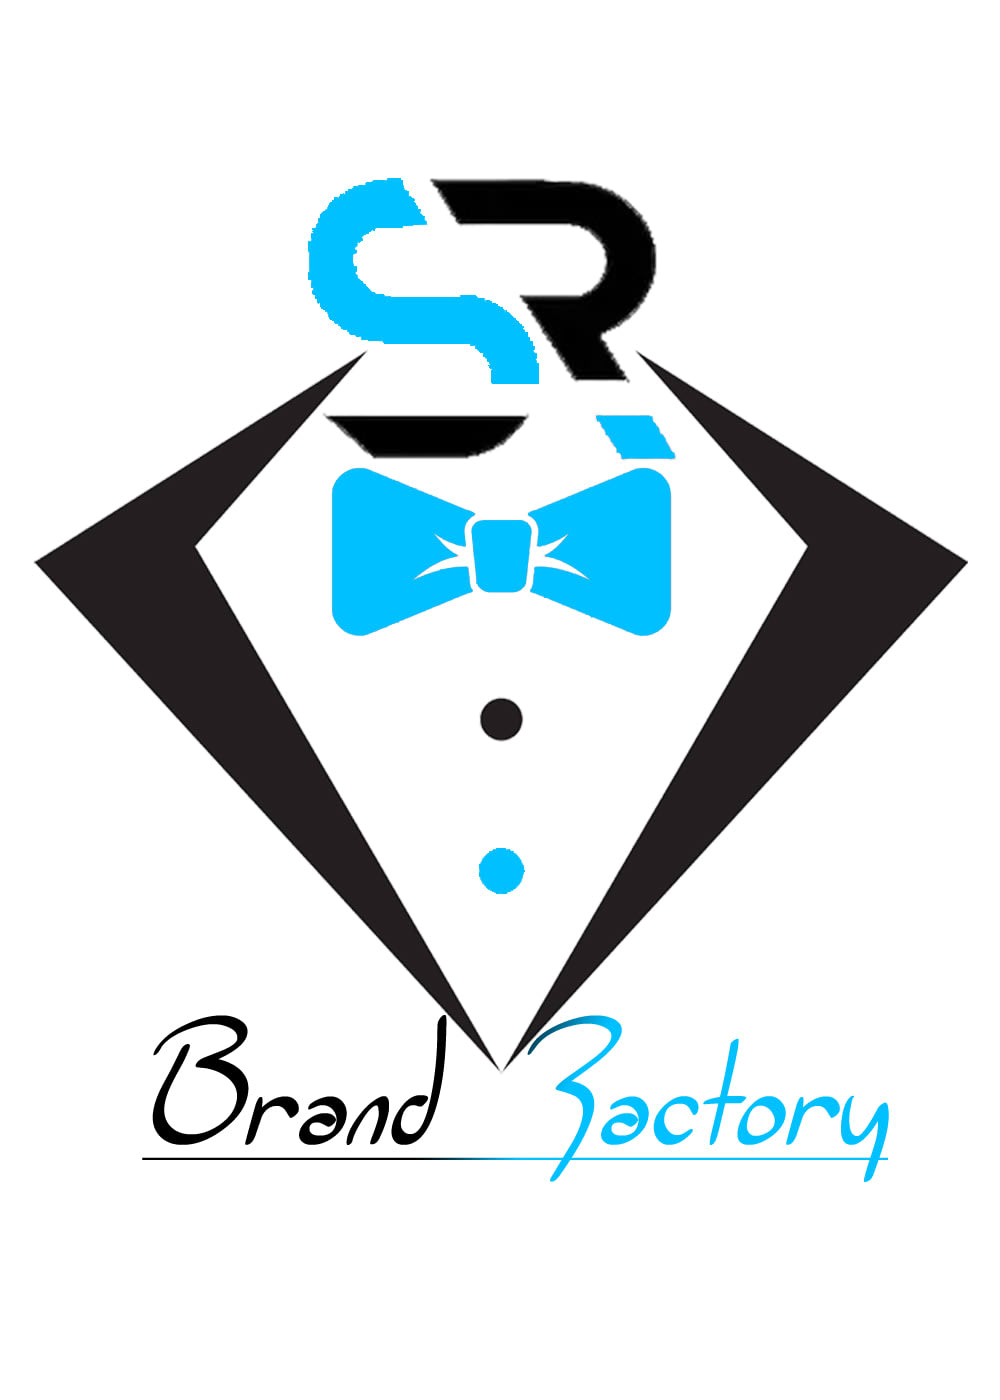 SR Brand Factory